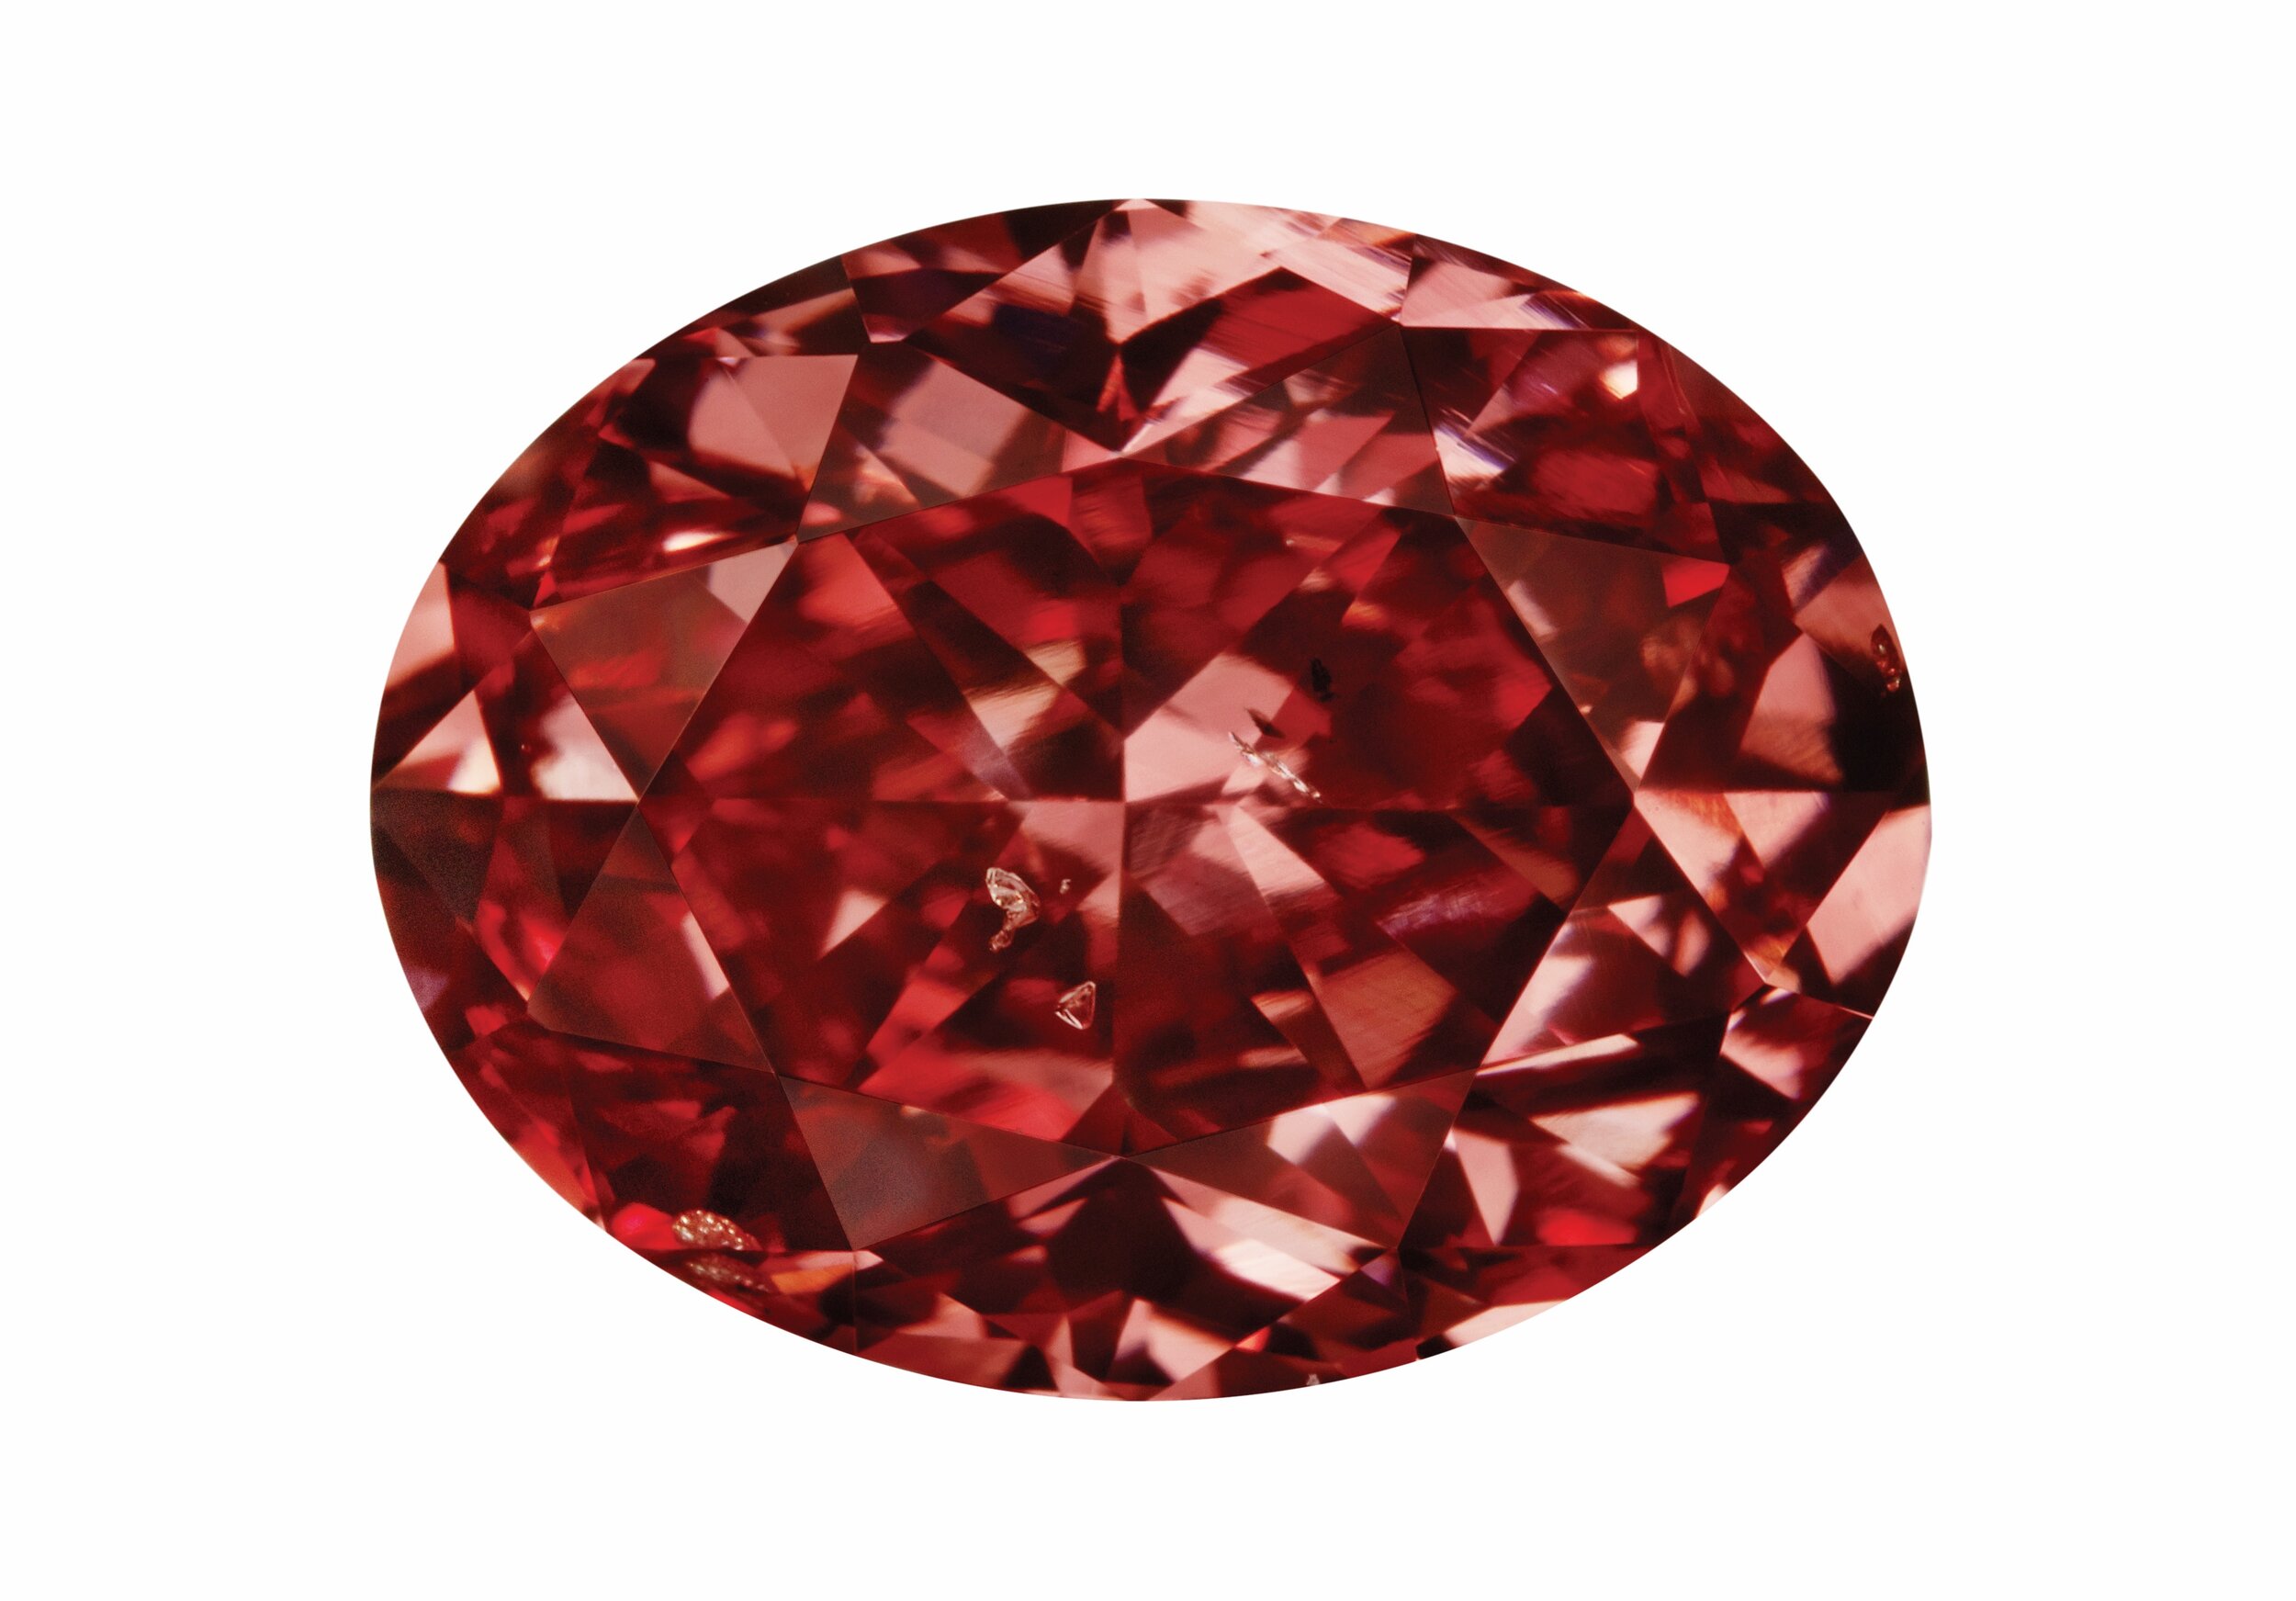 The Argyle Aurora, 1.47 carat fancy red oval cut diamond. Rio Tinto